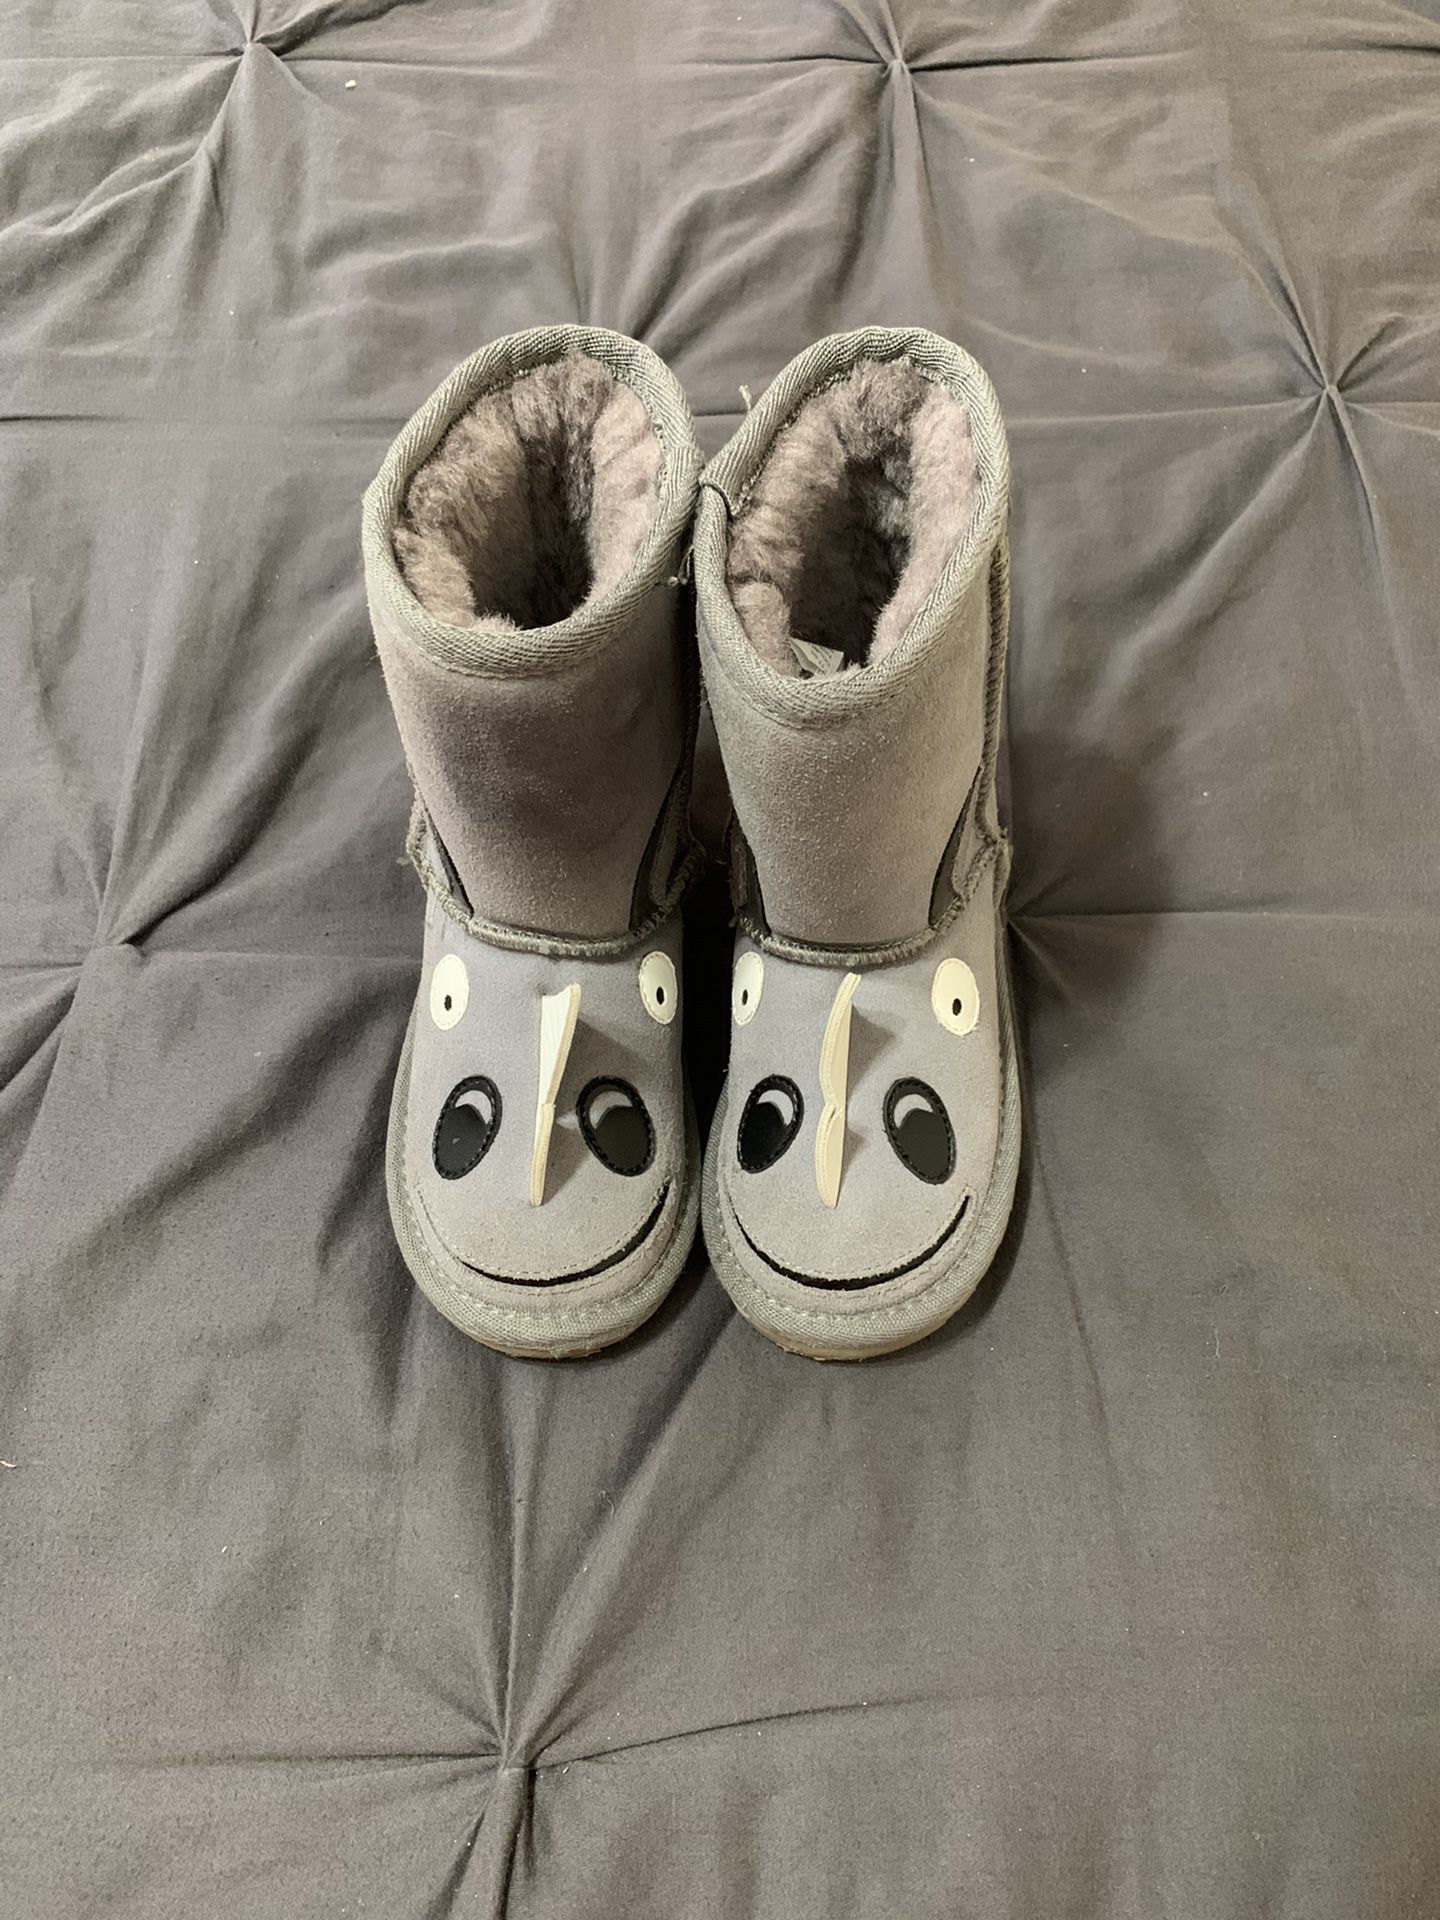 Toddler Snow Boots Emu Australia 